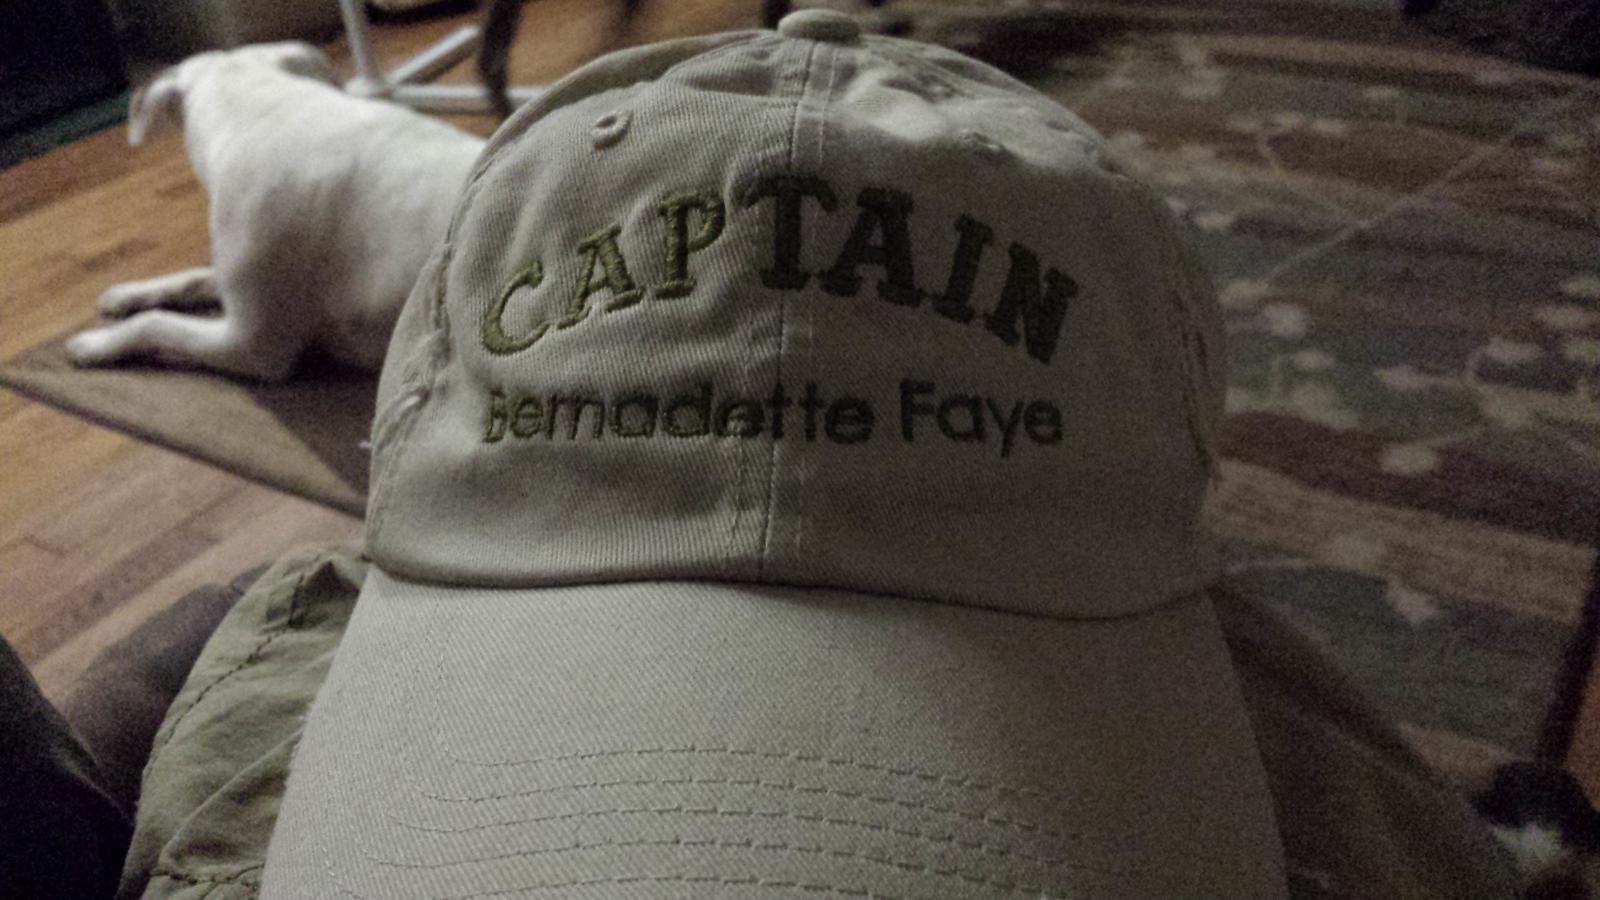 Bernadette_Faye_Captain's_Hat.jpg